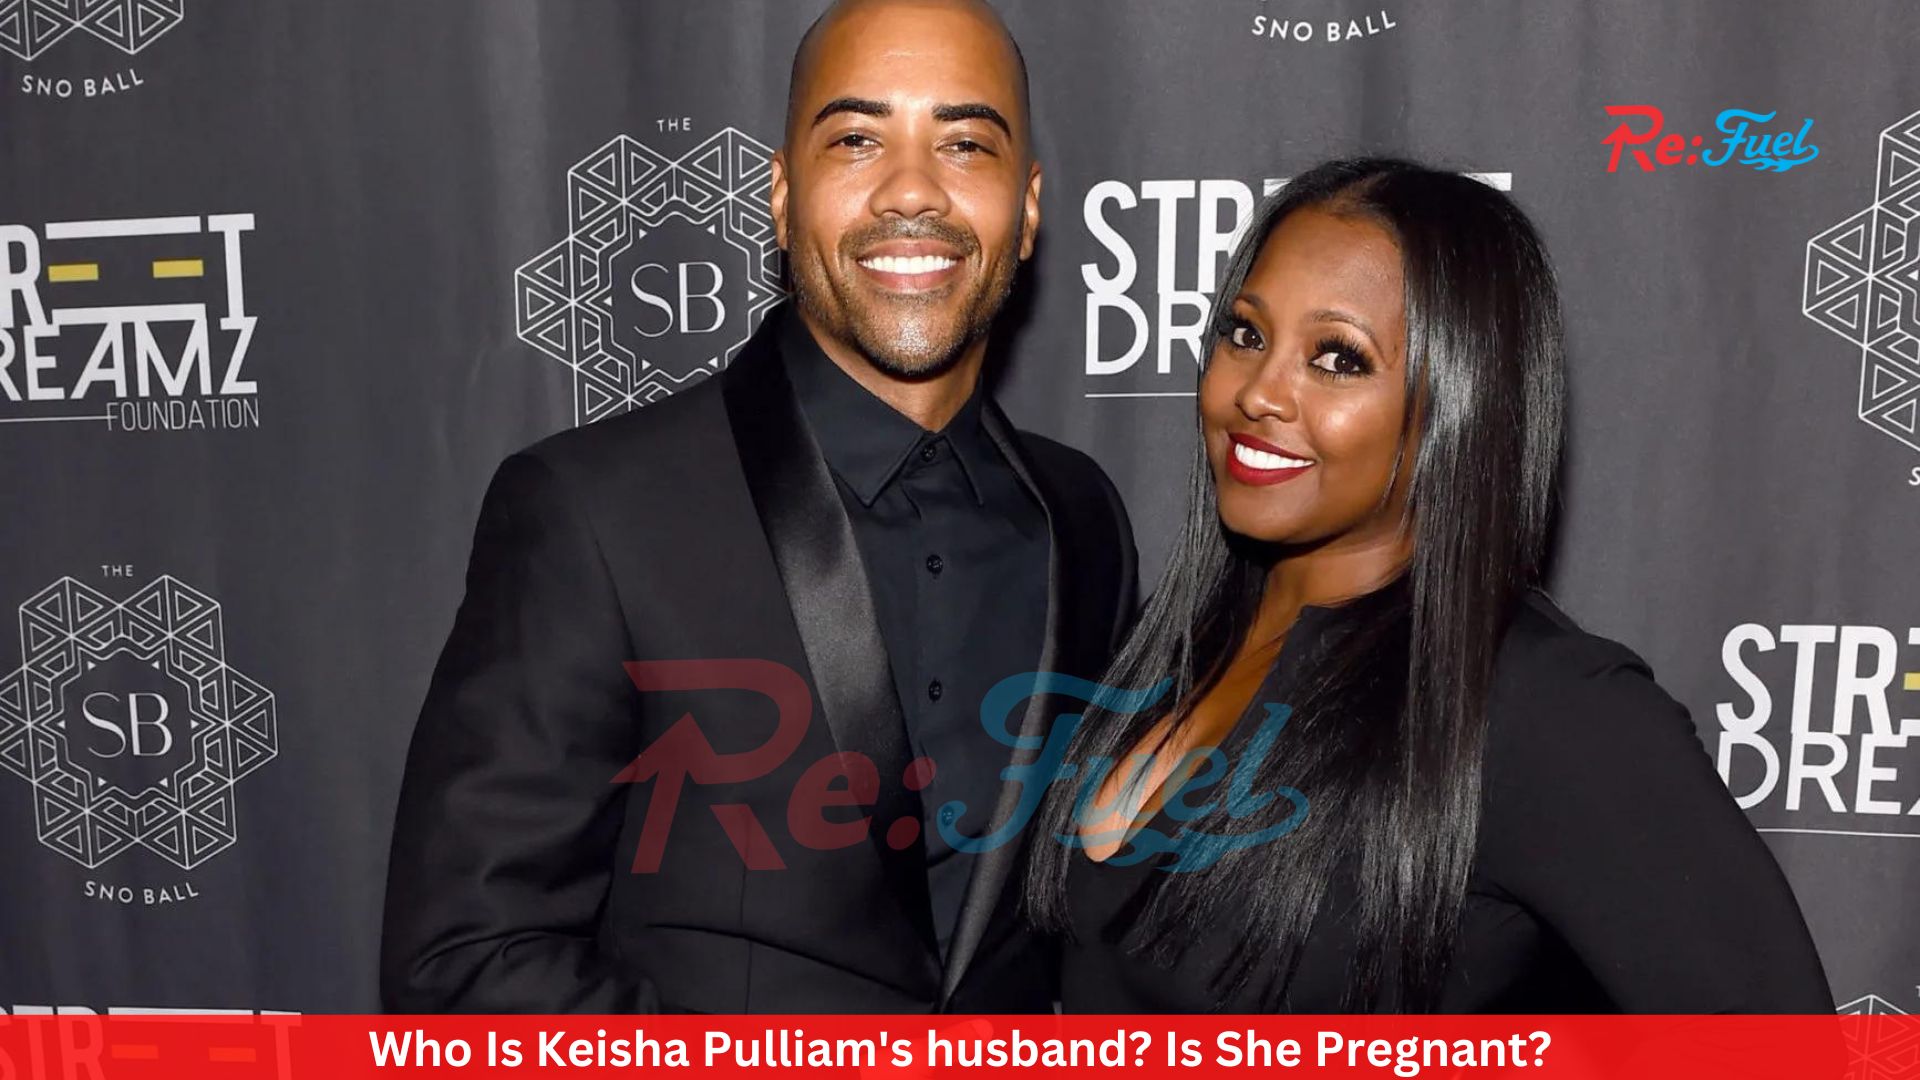 Who Is Keisha Pulliam's husband? Is She Pregnant?